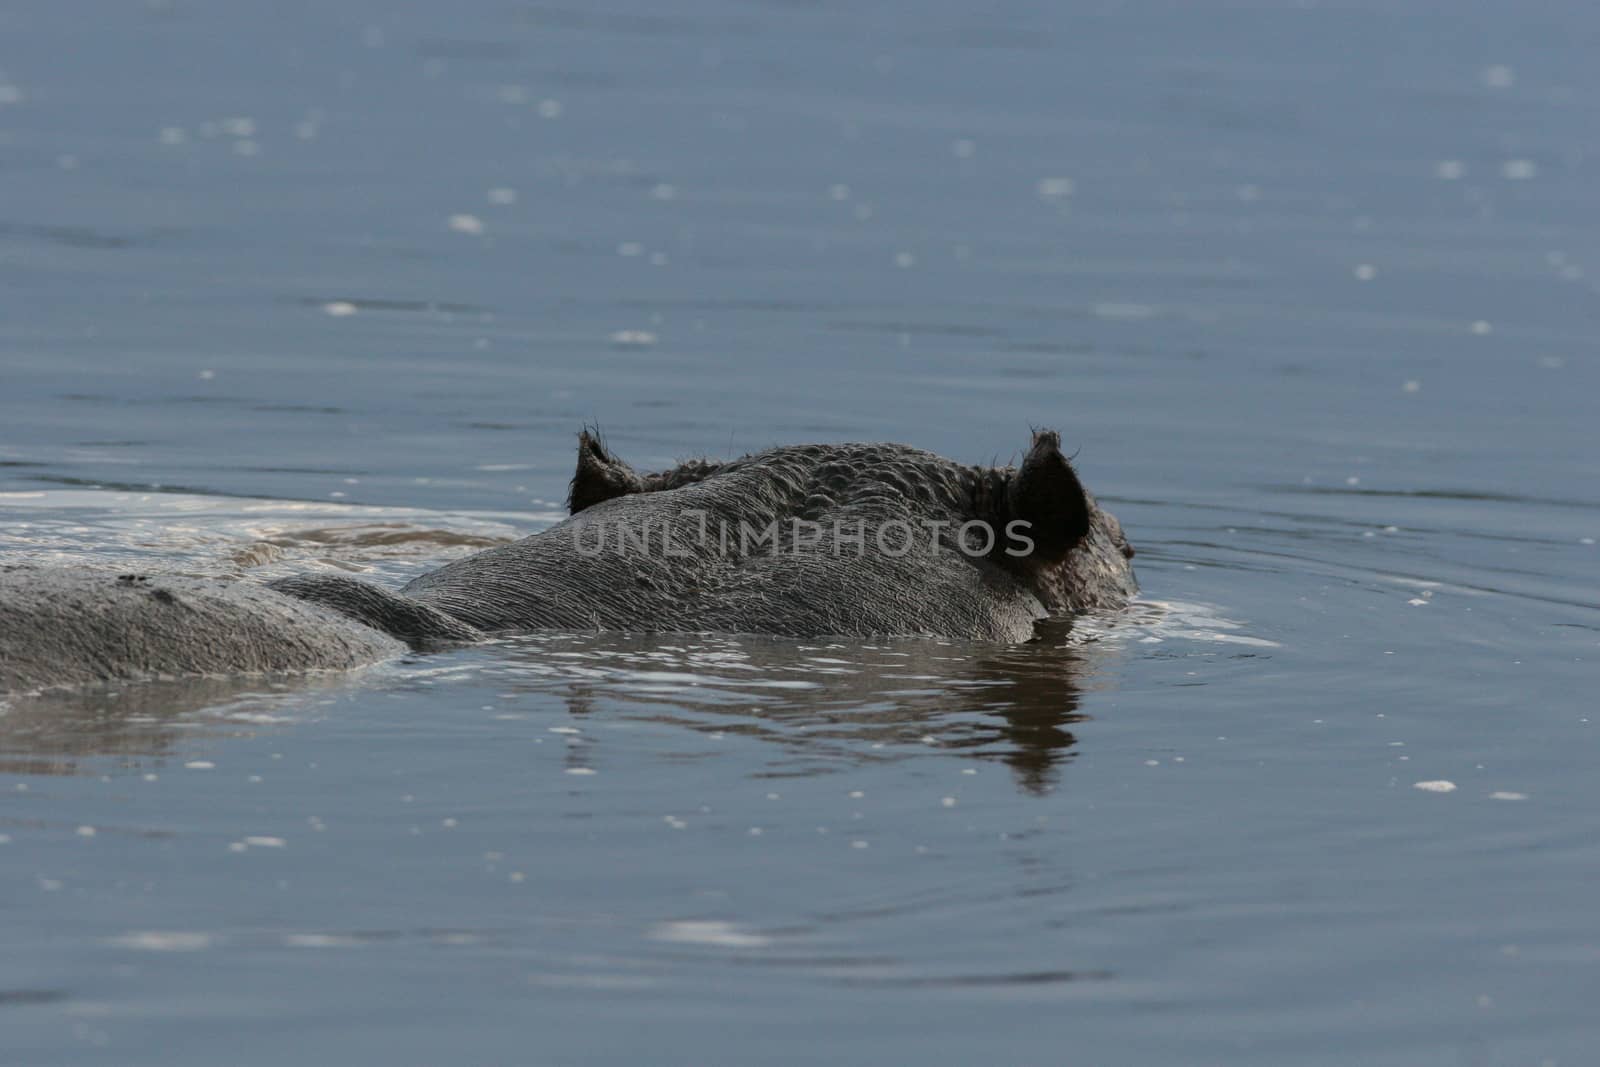 Wild Hippo in African river water hippopotamus (Hippopotamus amphibius) by desant7474